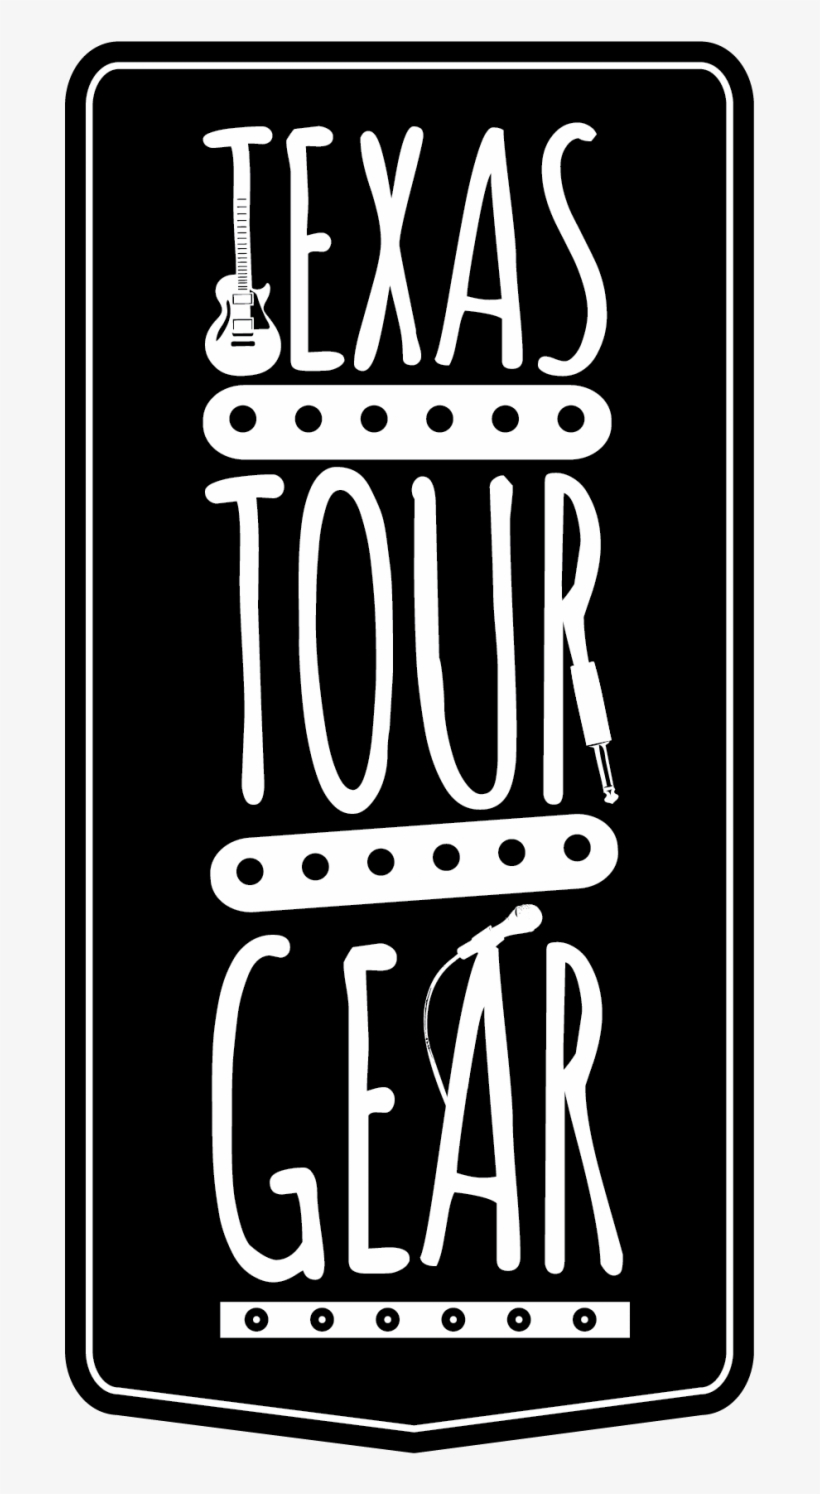 Texas Tour Gear - Guinness, transparent png #741359